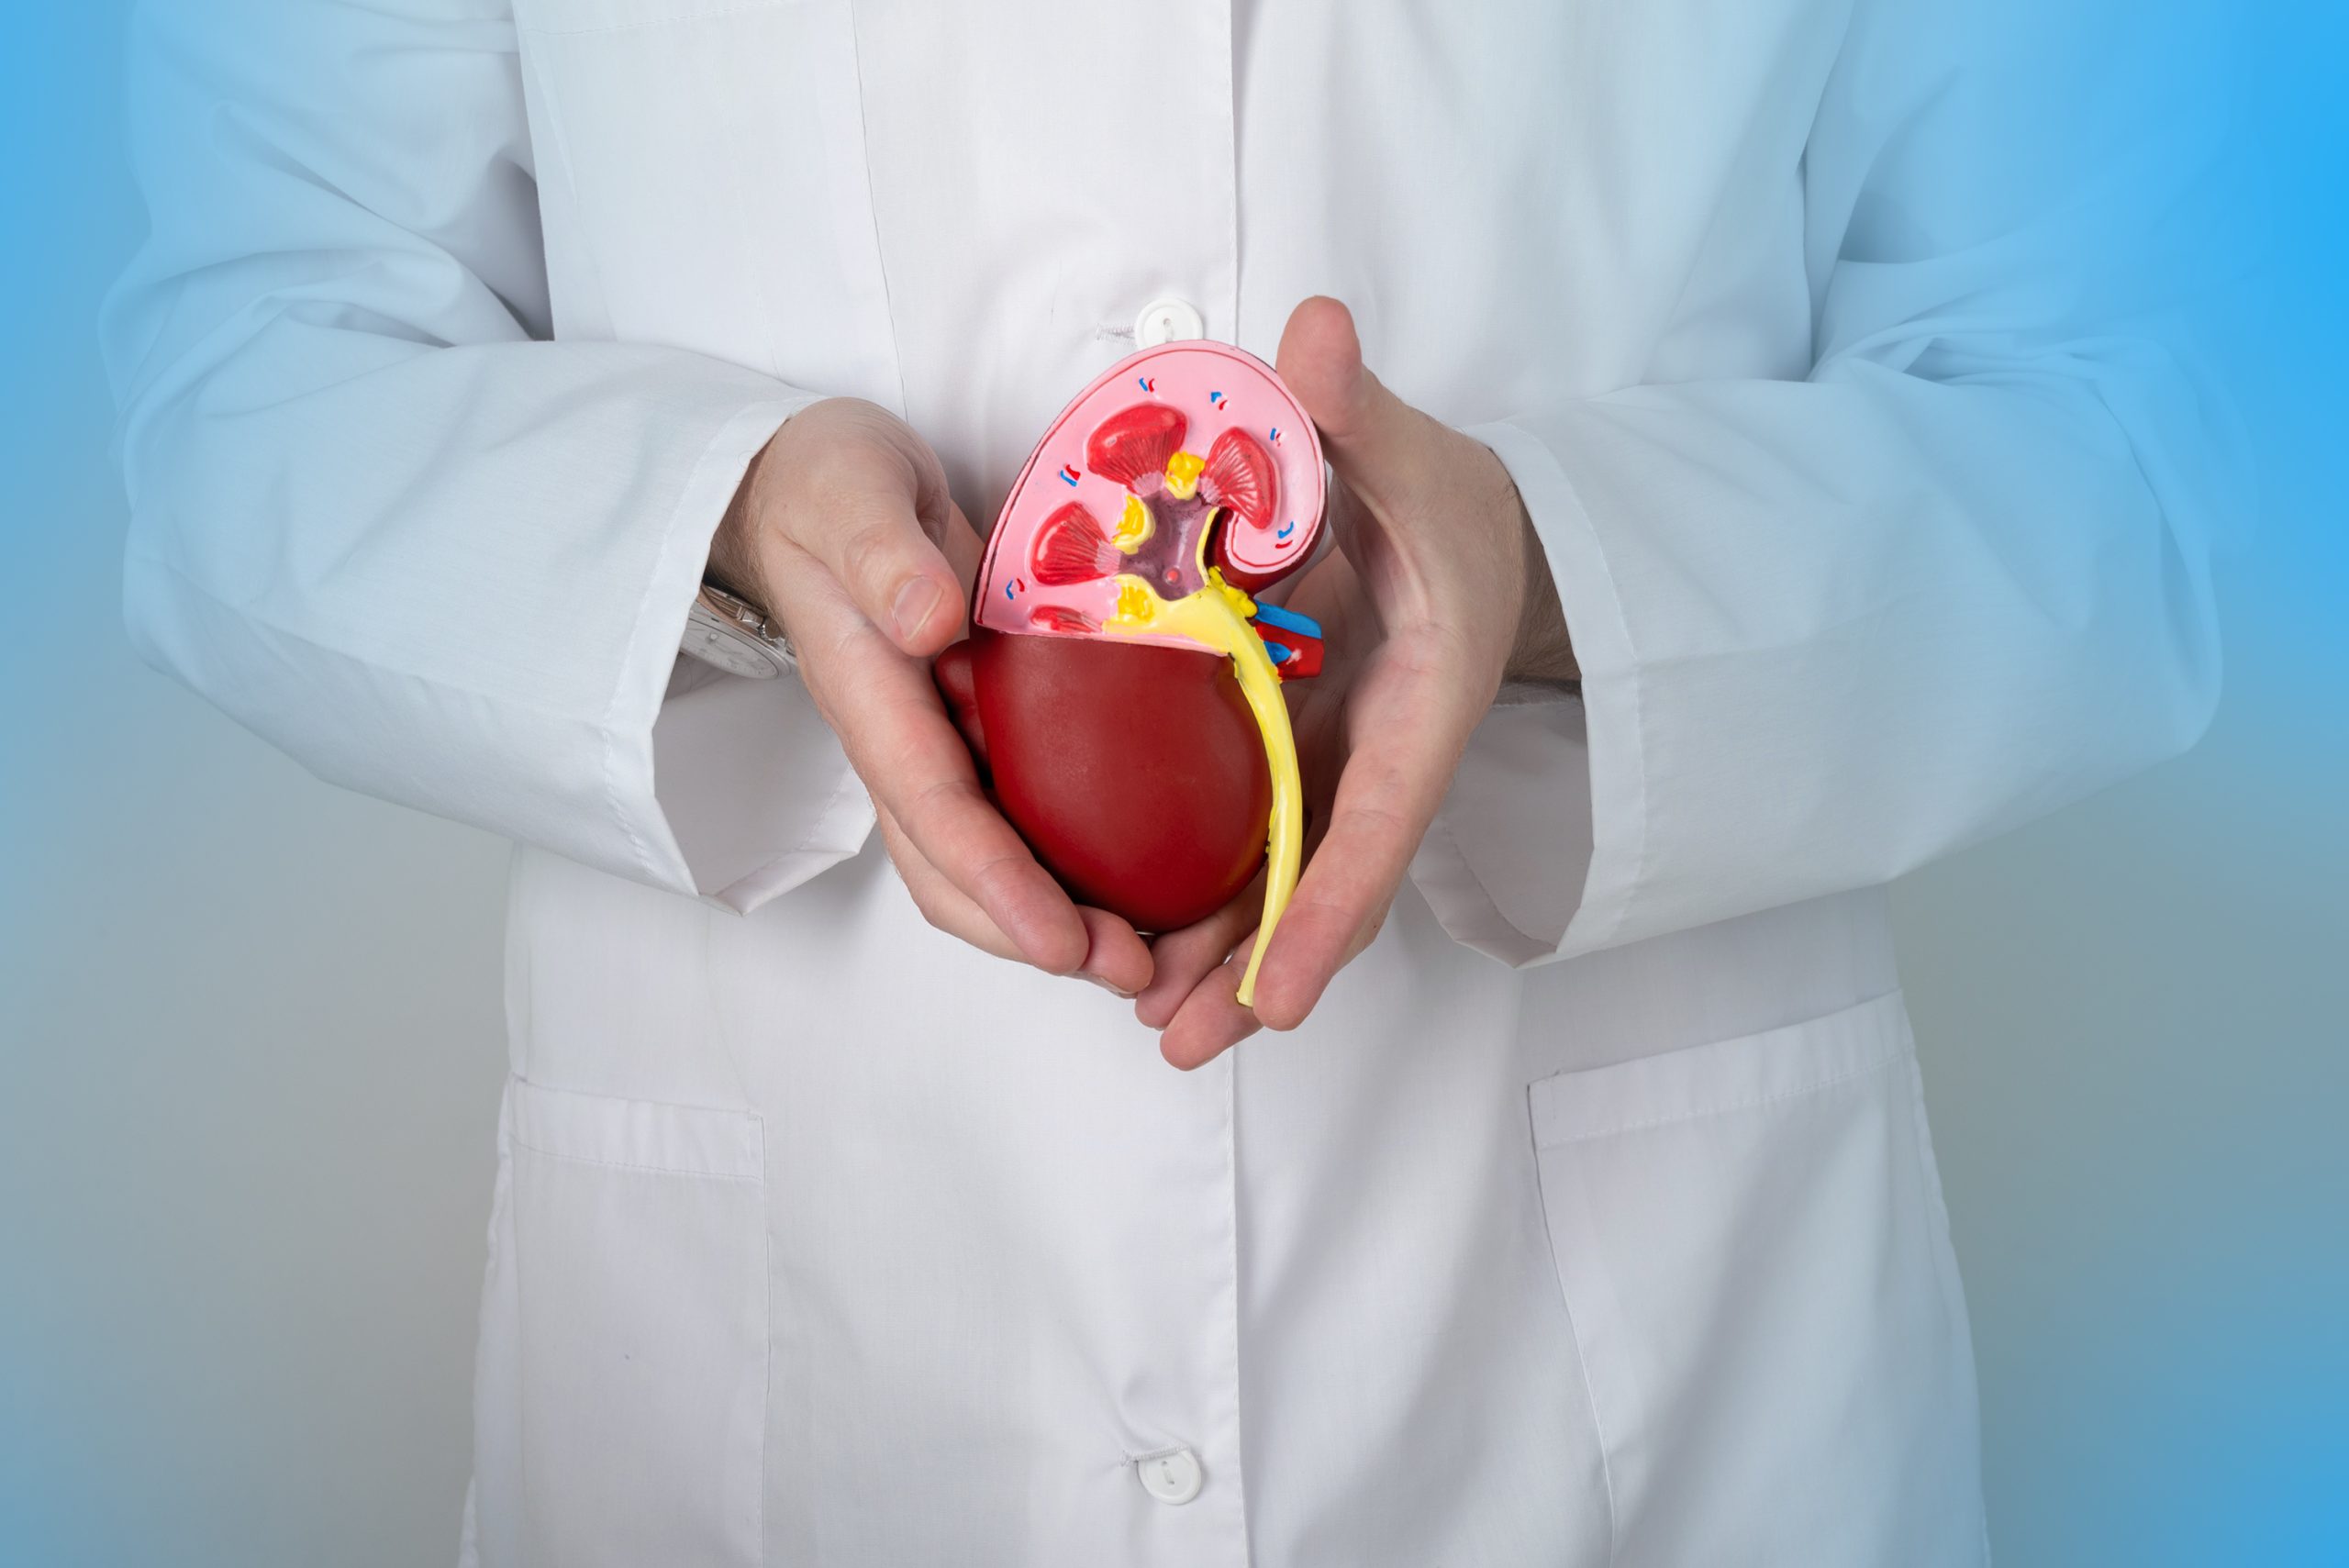 Doctor hands holding kidneys shape. Health care, medical insurance concept.